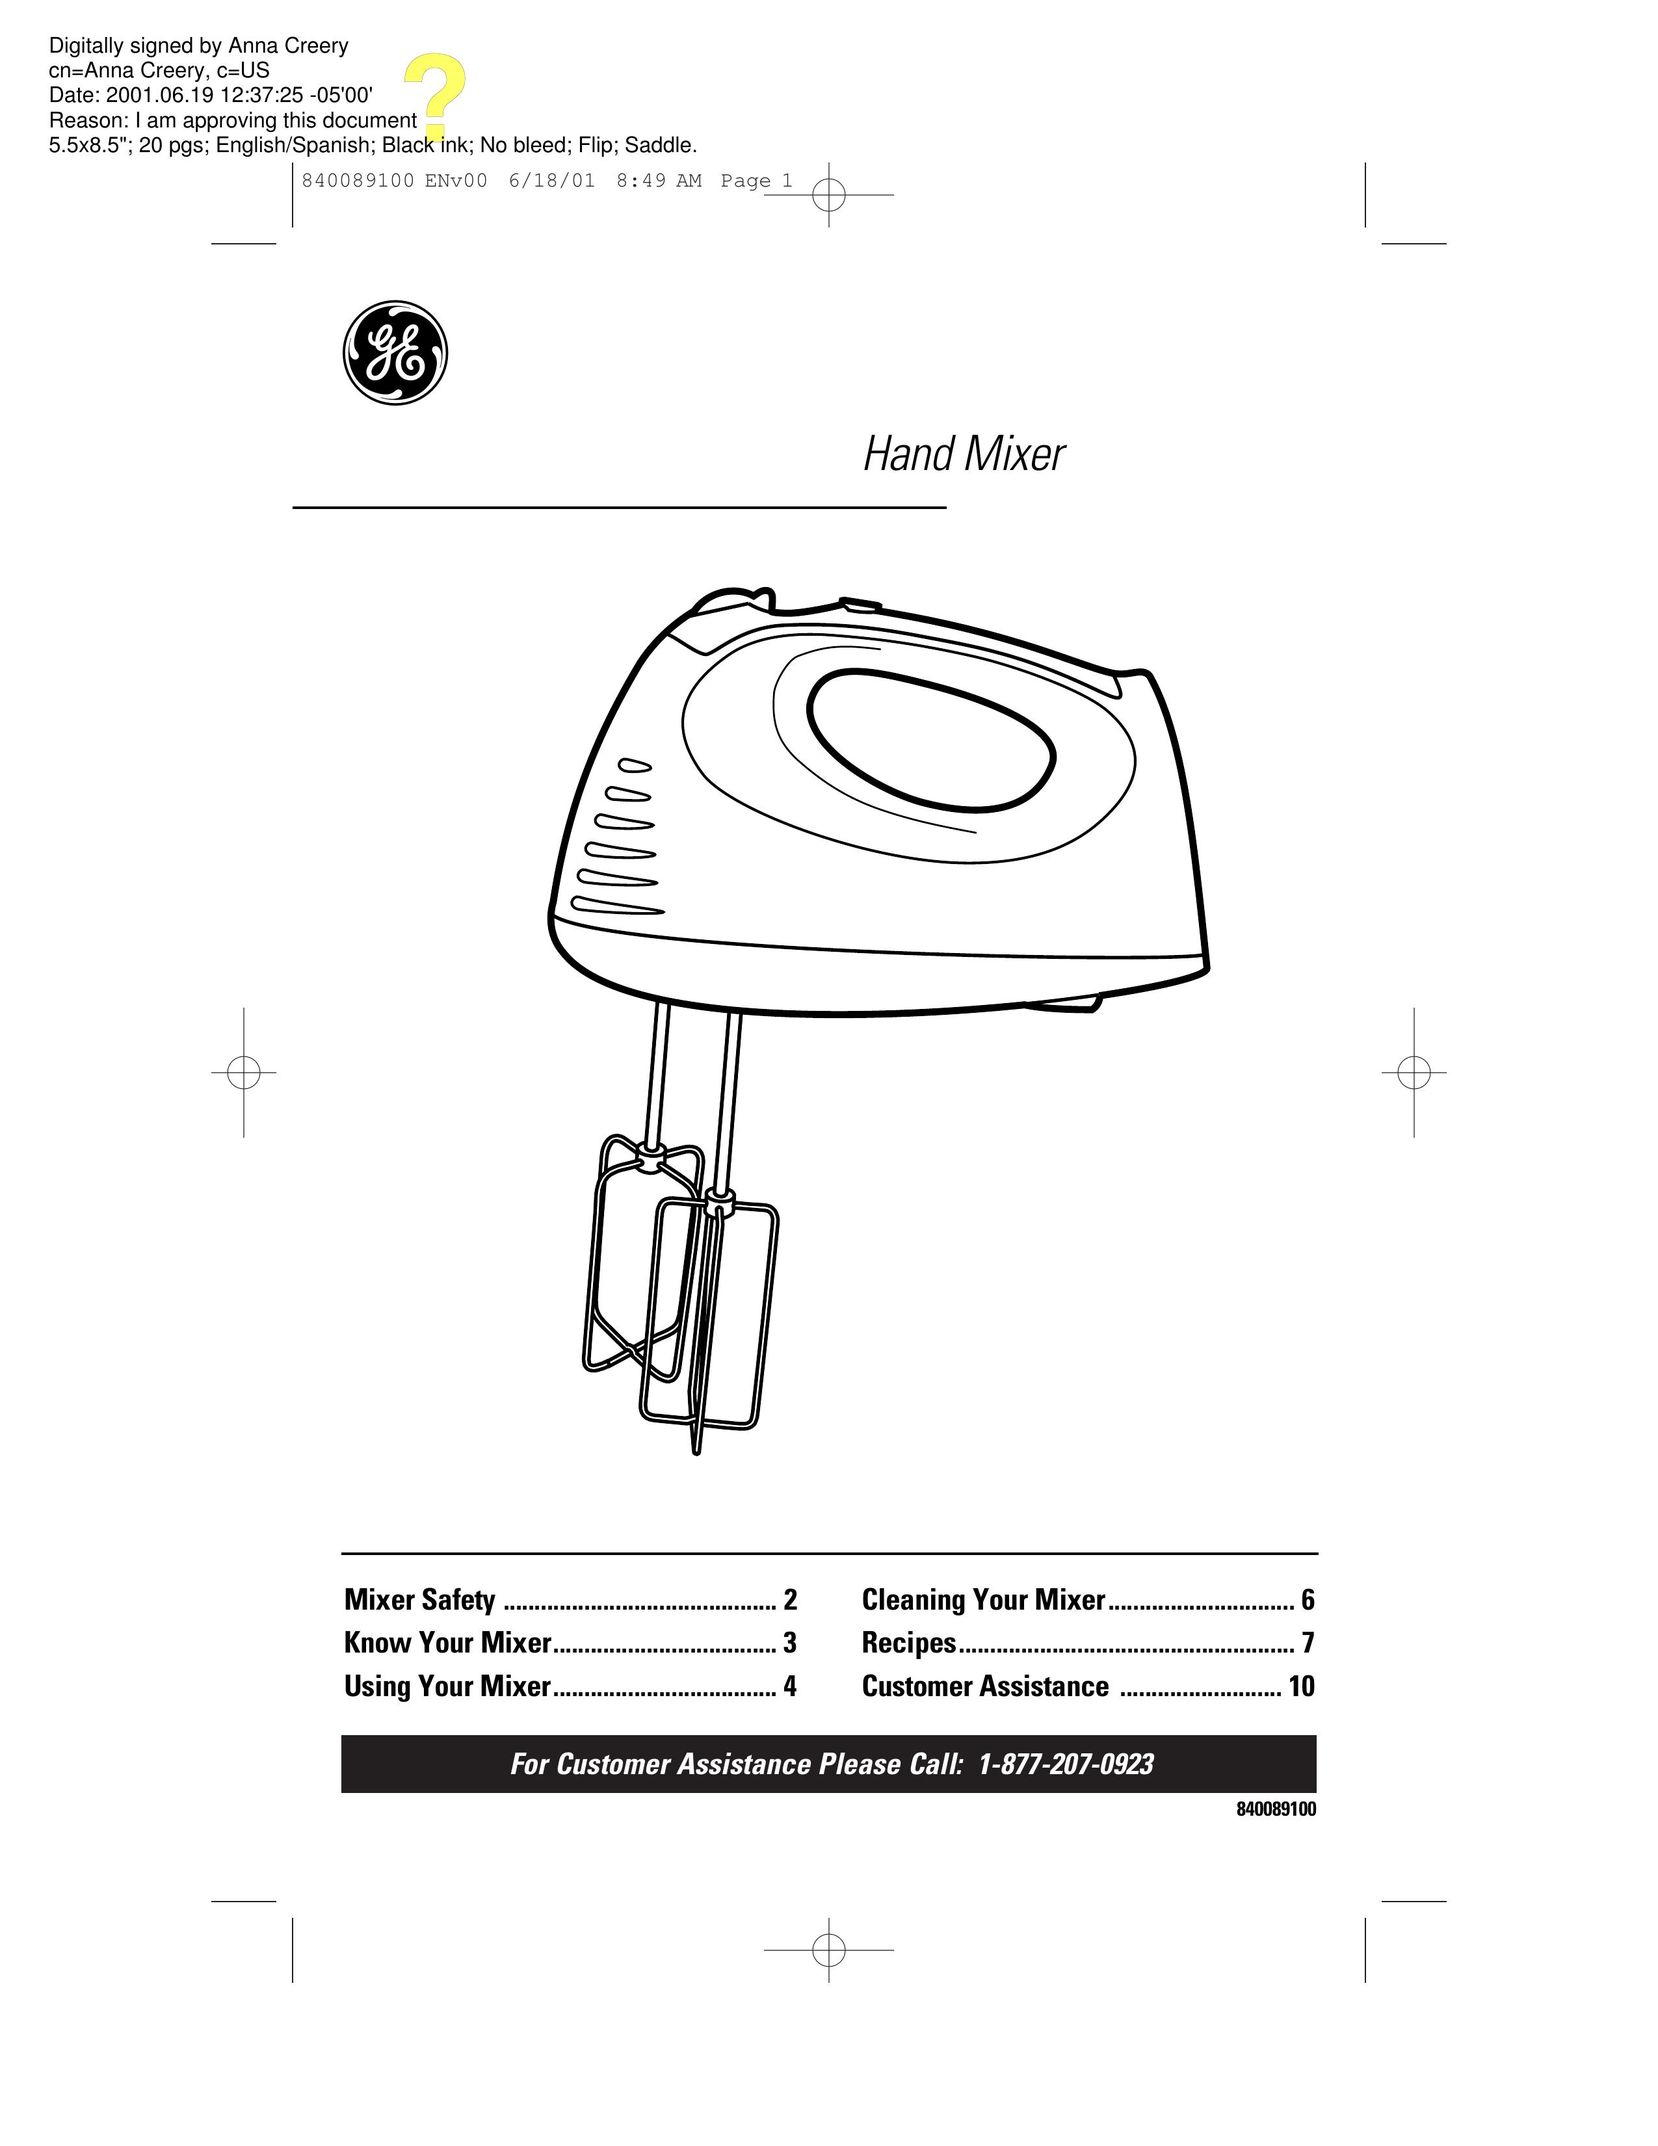 GE 169160 Mixer User Manual